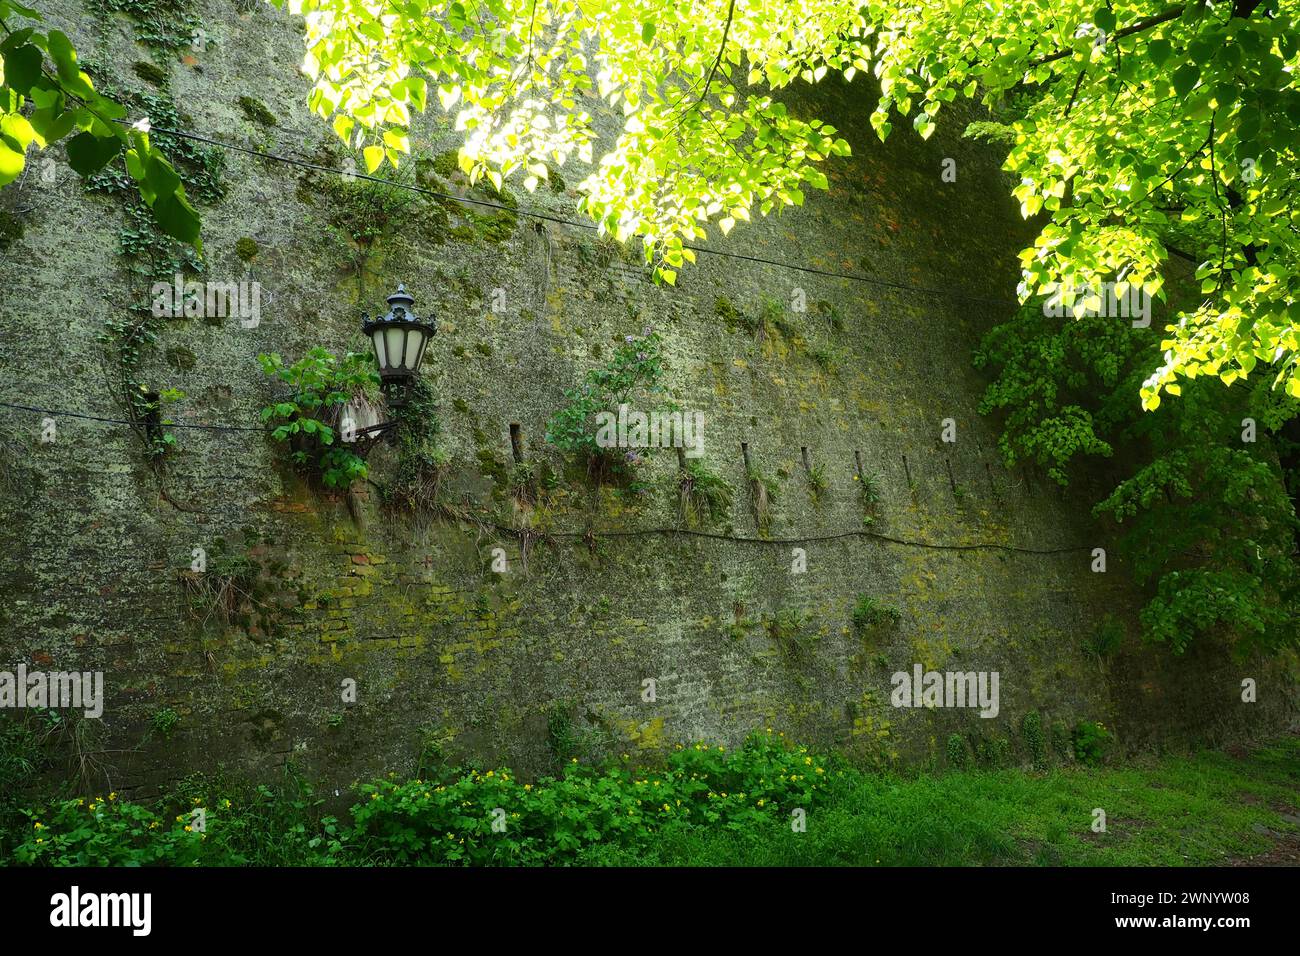 Linden park near the old brick wall of the fortress Petrovaradin Novi Sad Serbia. Fresh foliage of linden trees Stock Photo